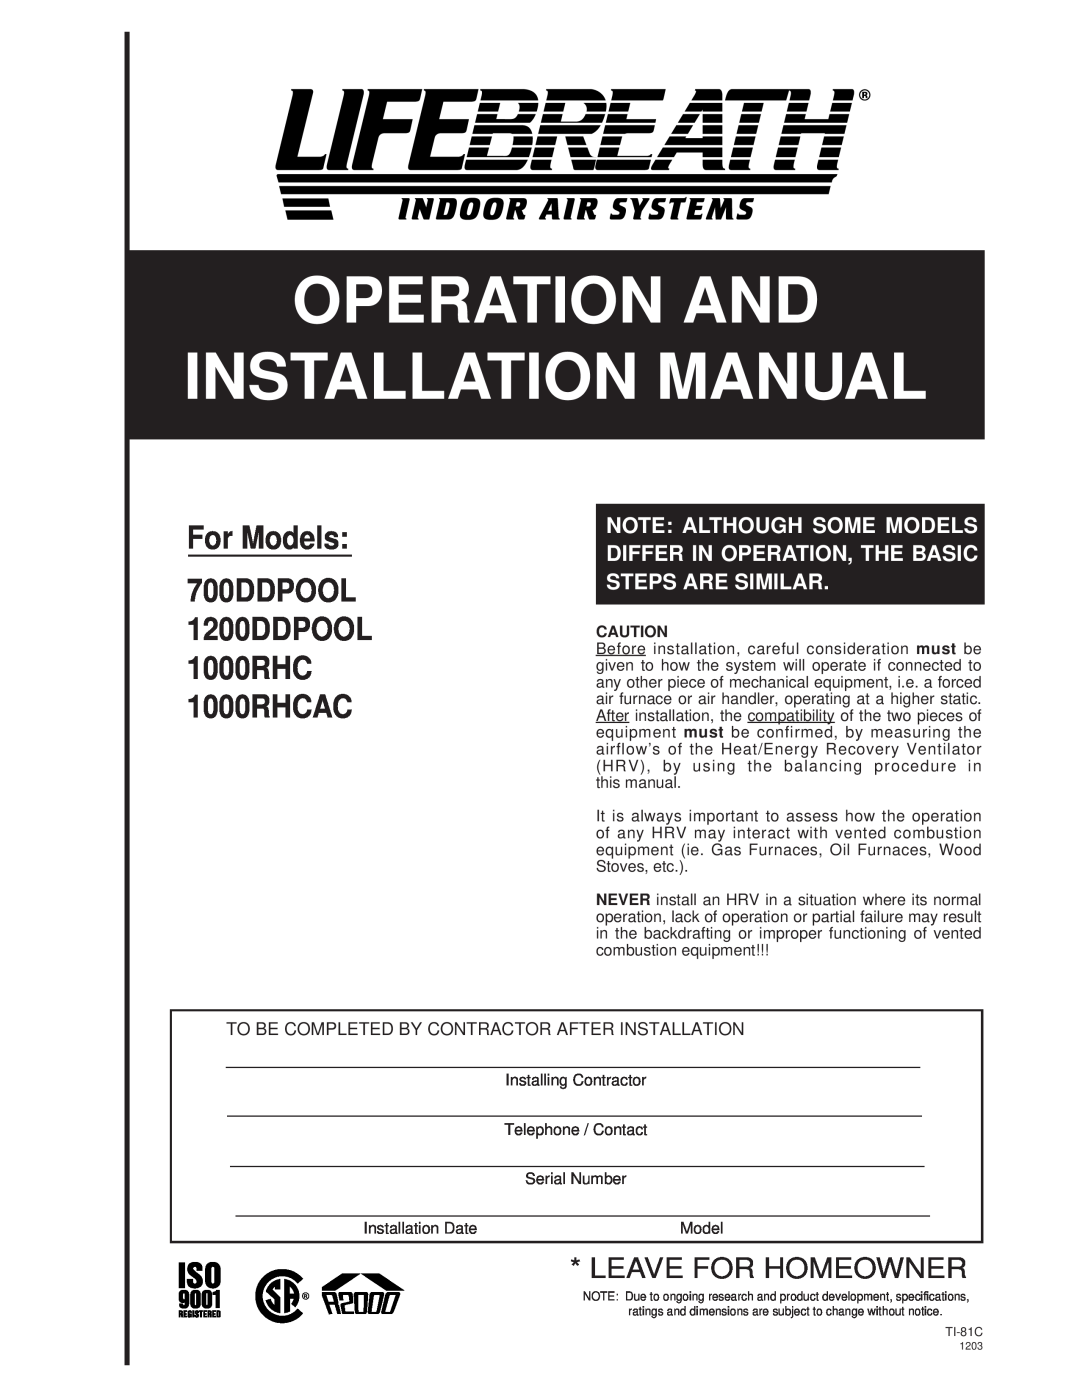 Lifebreath installation manual For Models 700DDPOOL 1200DDPOOL 1000RHC 1000RHCAC, Operation And Installation Manual 